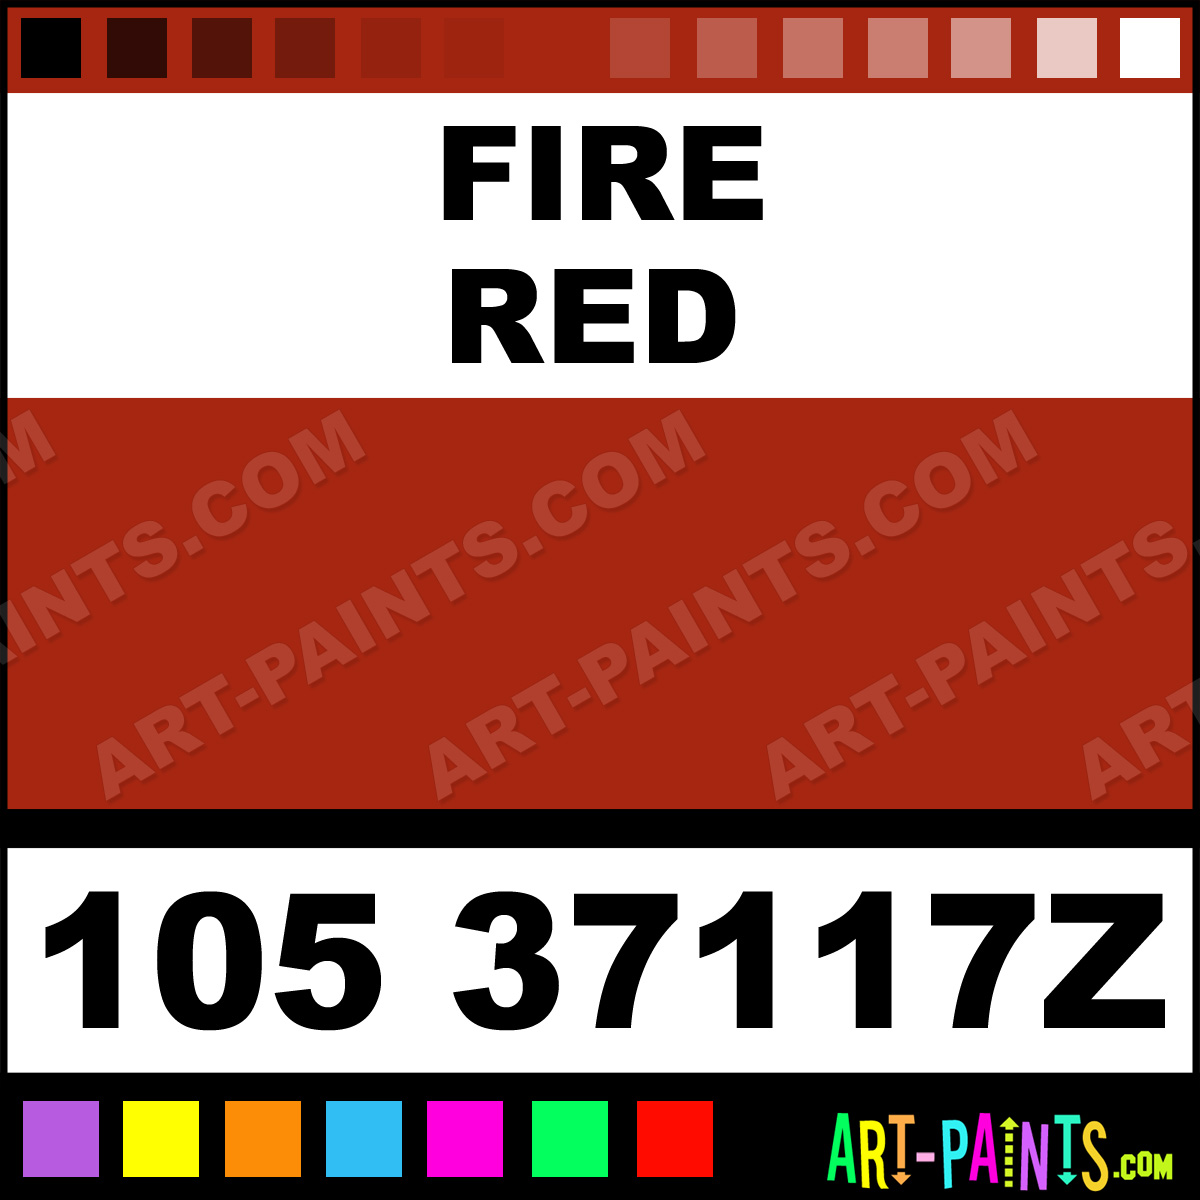 Fire-Red-lg.jpg